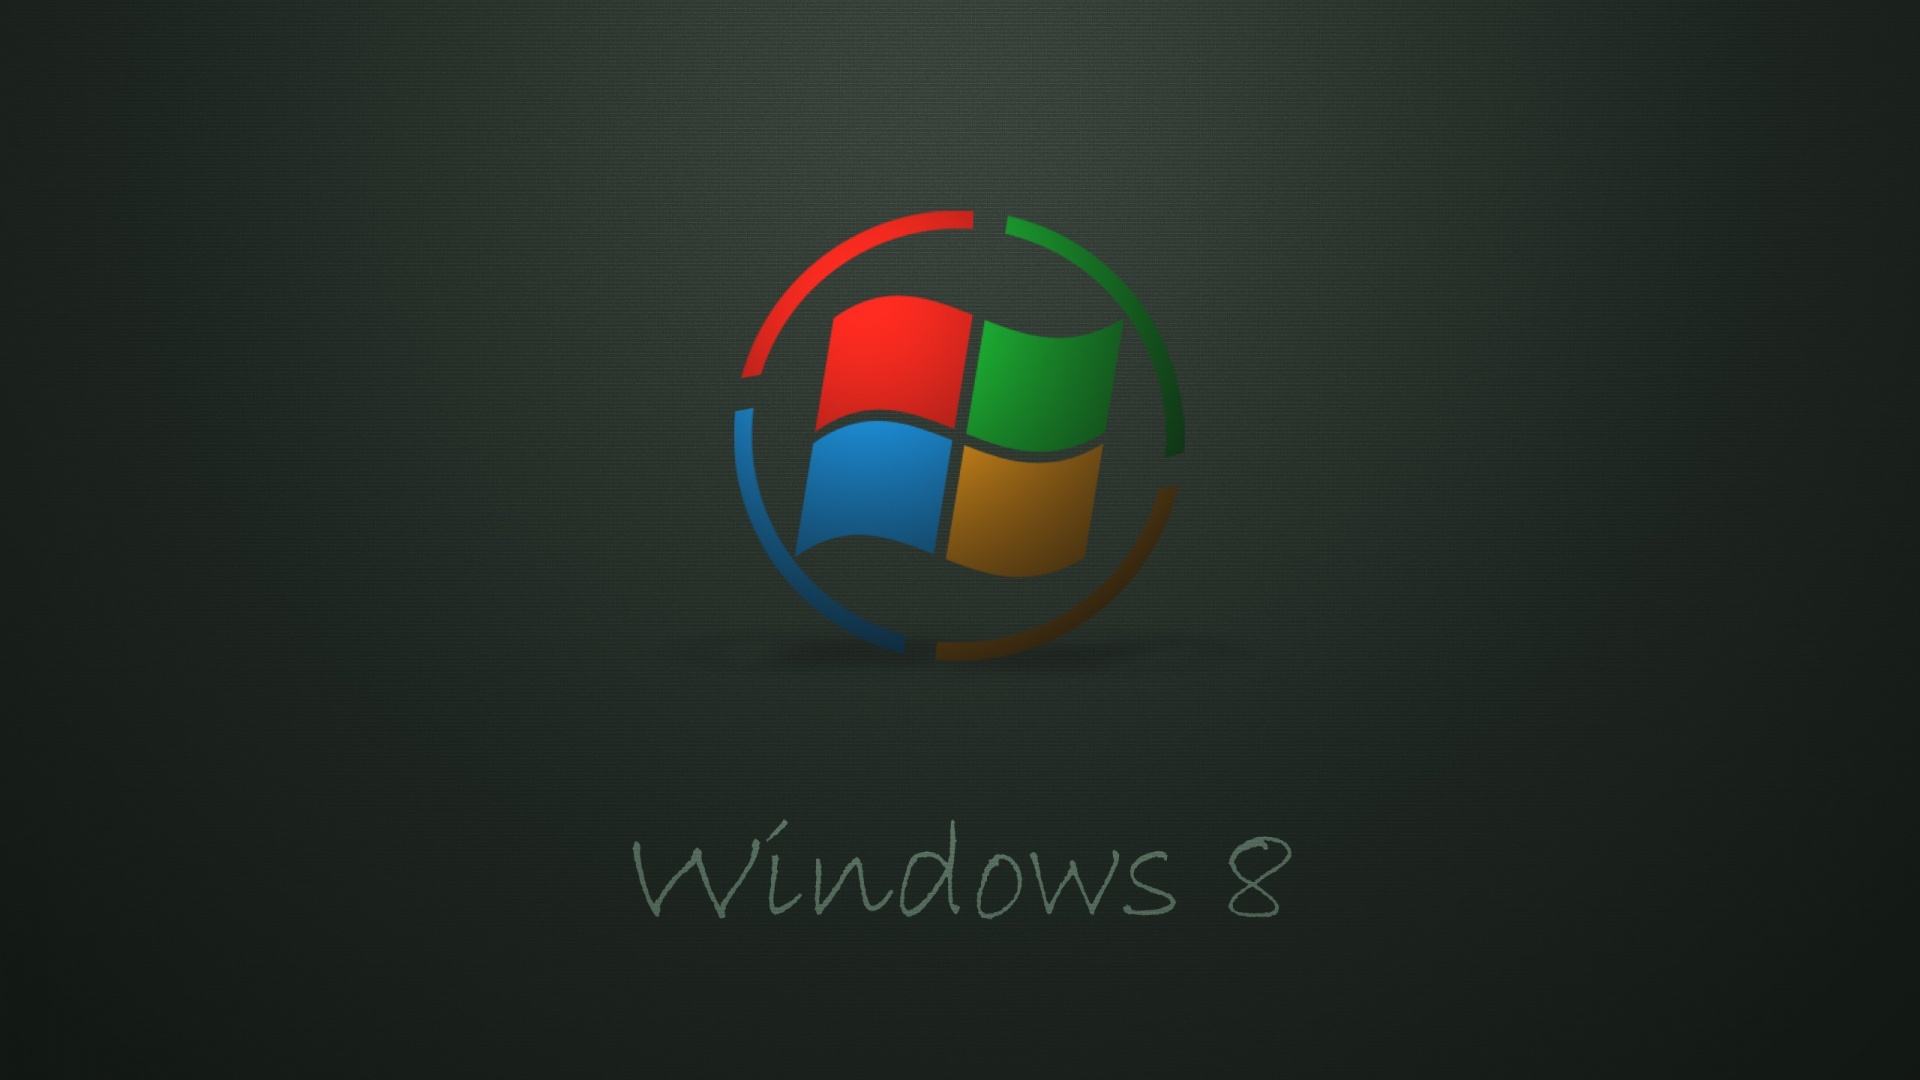 Technology Windows 8 1920x1080